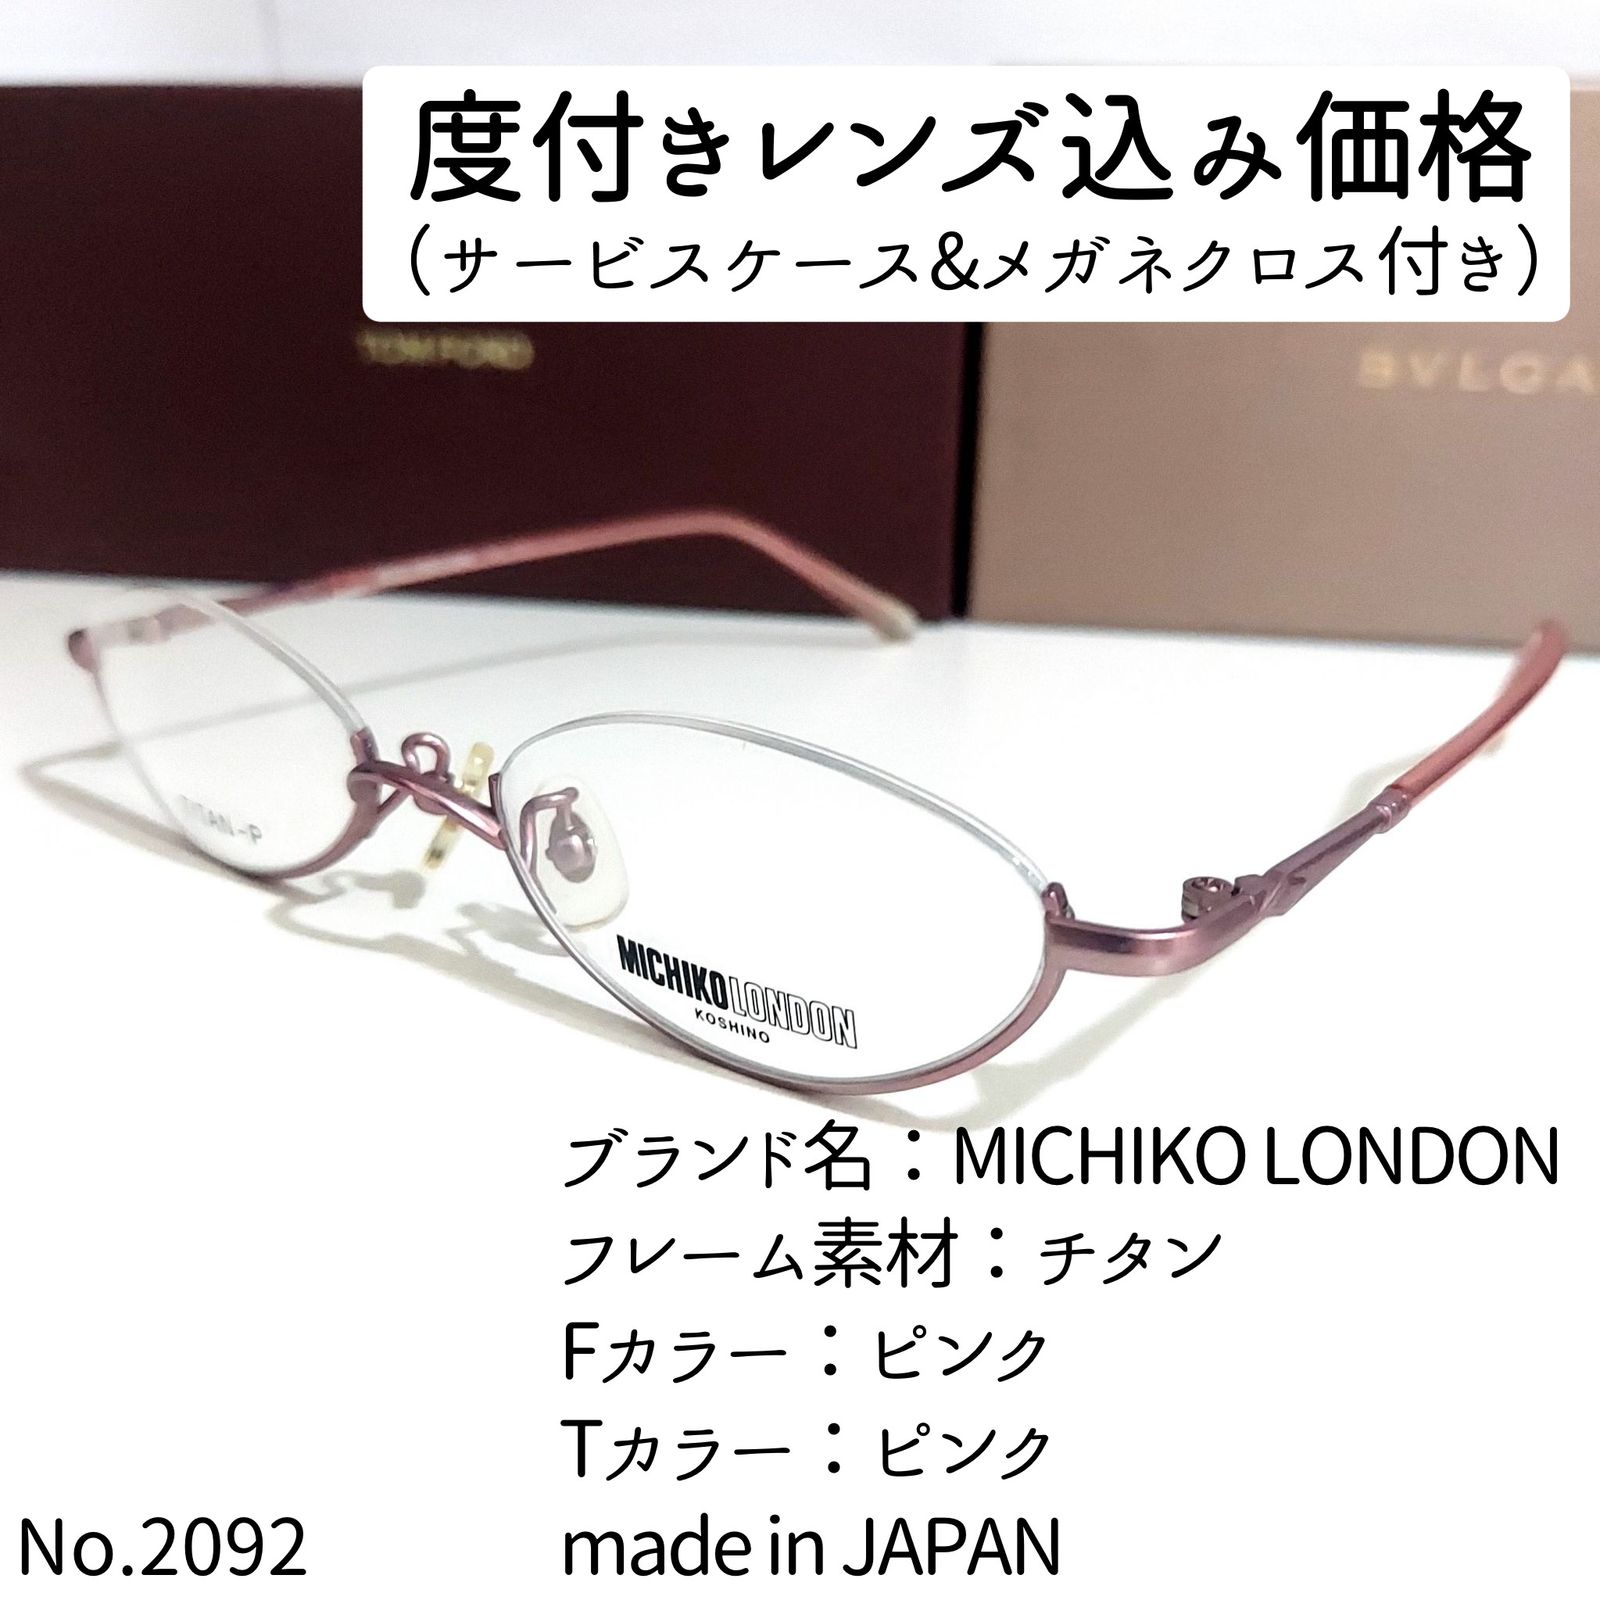 No.2092メガネ MICHIKO LONDON【度数入り込み価格】-